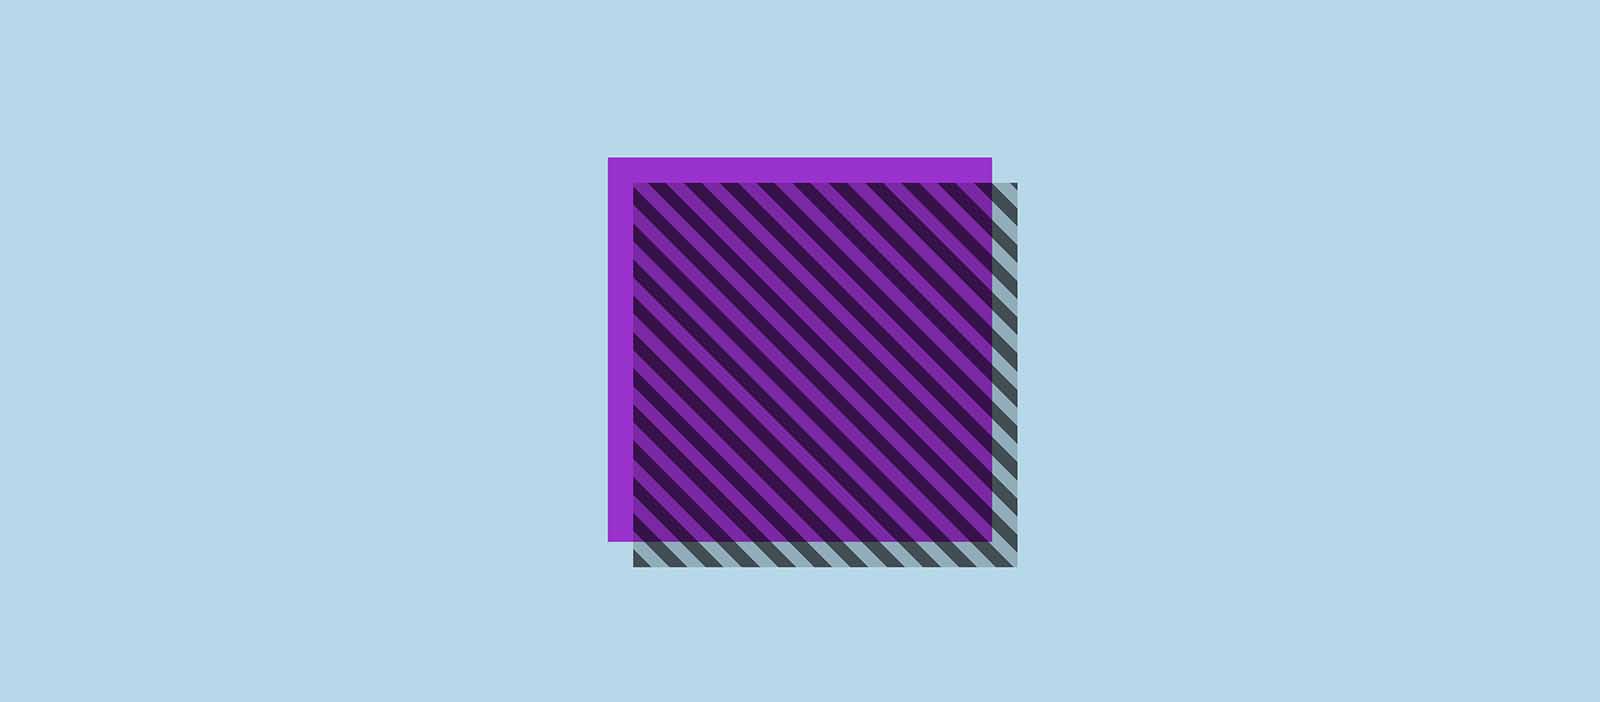 A diagonally striped square overlaid on a purple one